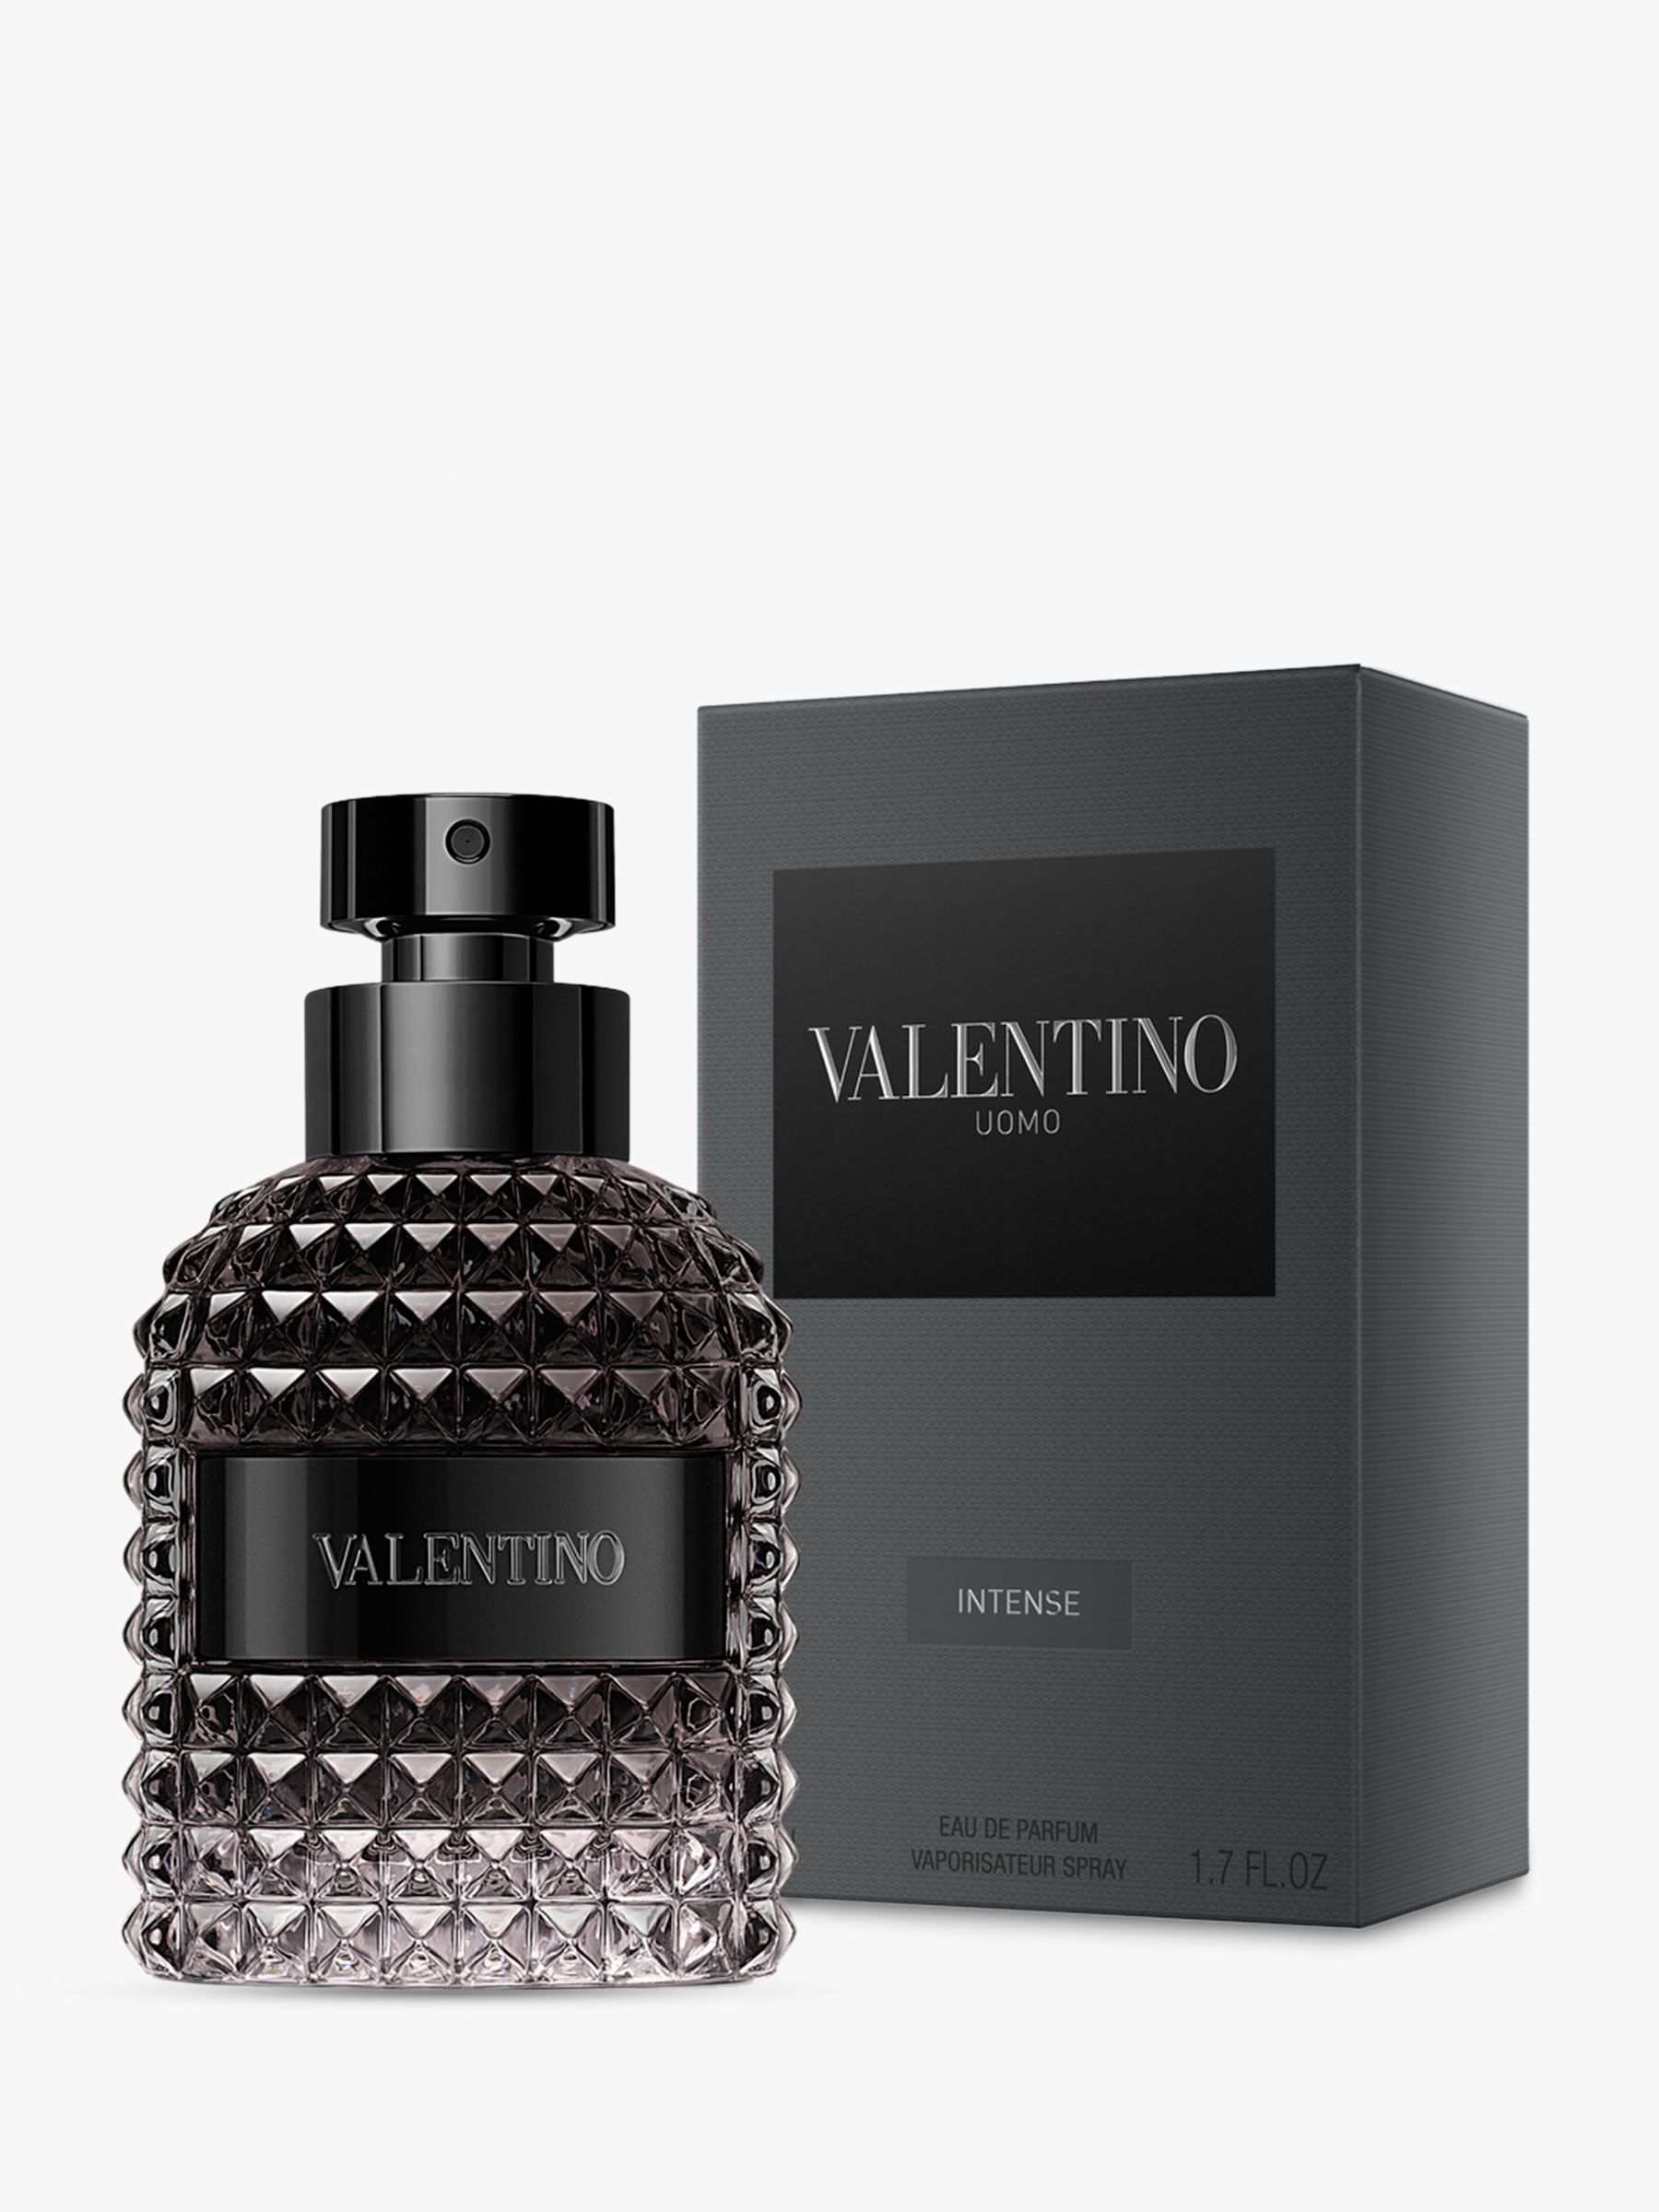 Valentino Eau Parfum 50ml at John Lewis &